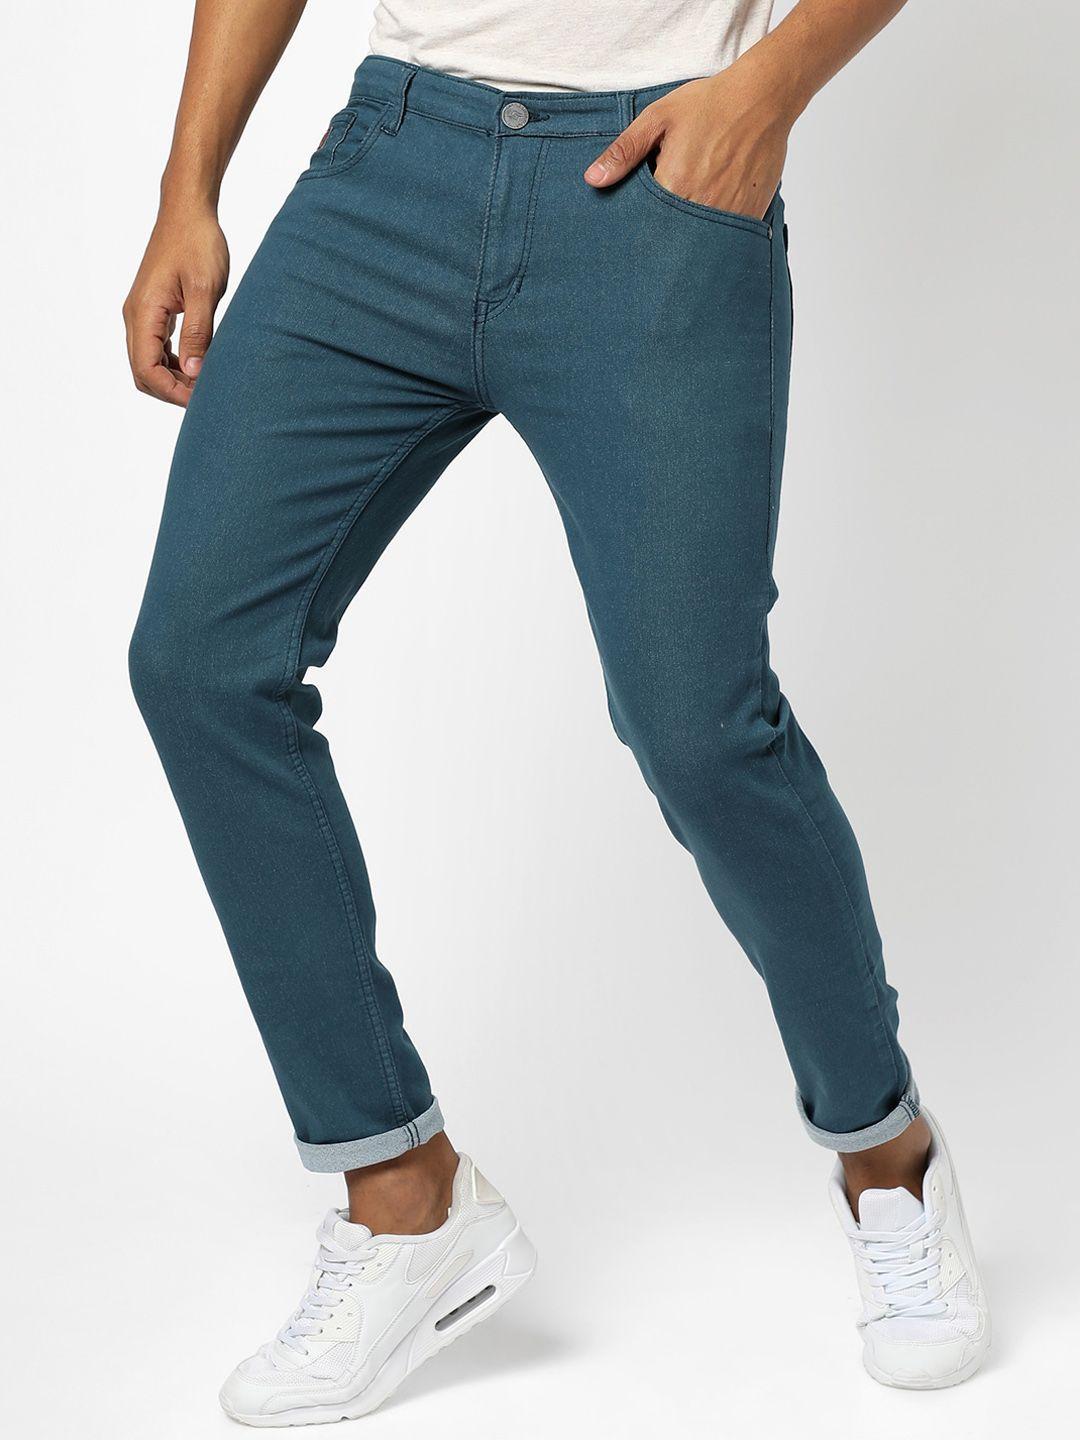 campus sutra men navy blue smart slim fit stretchable jeans